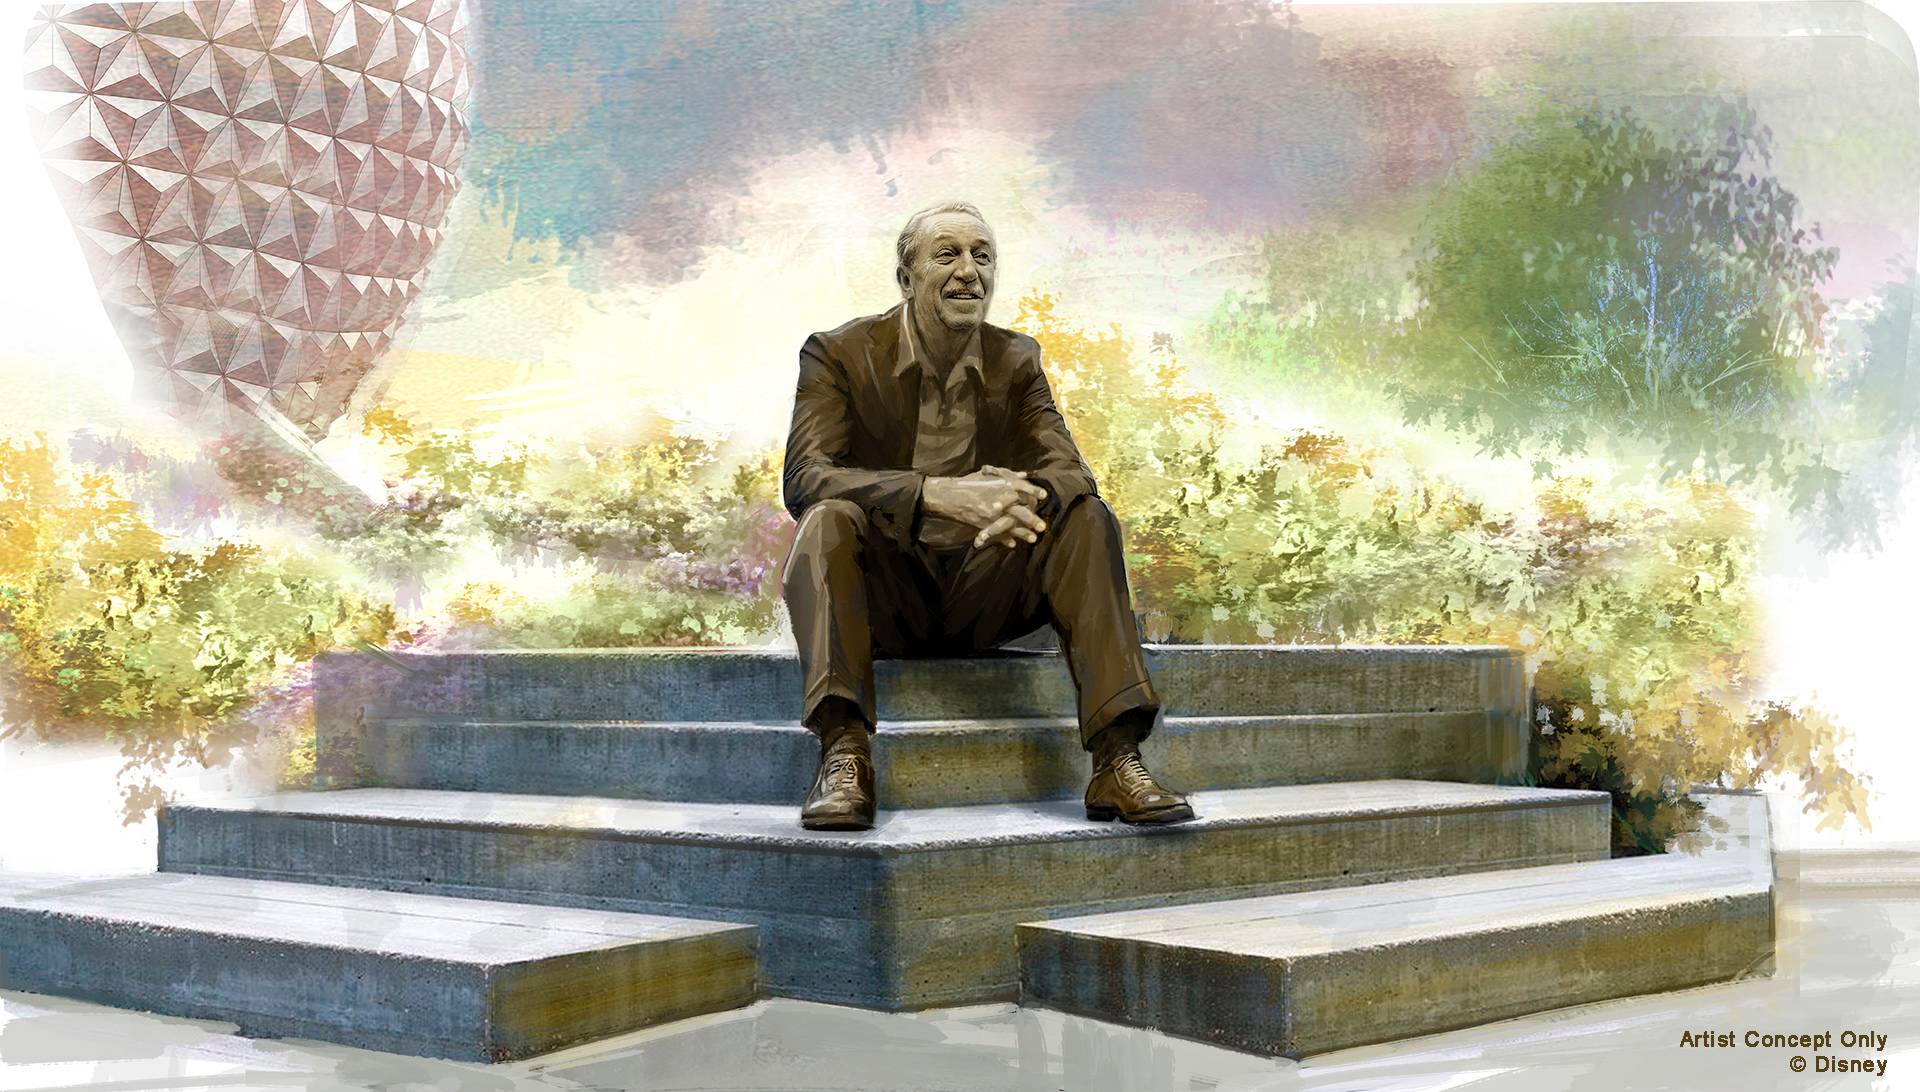 Concept art of statue of Walt Disney in new World Celebration neighborhood at EPCOT